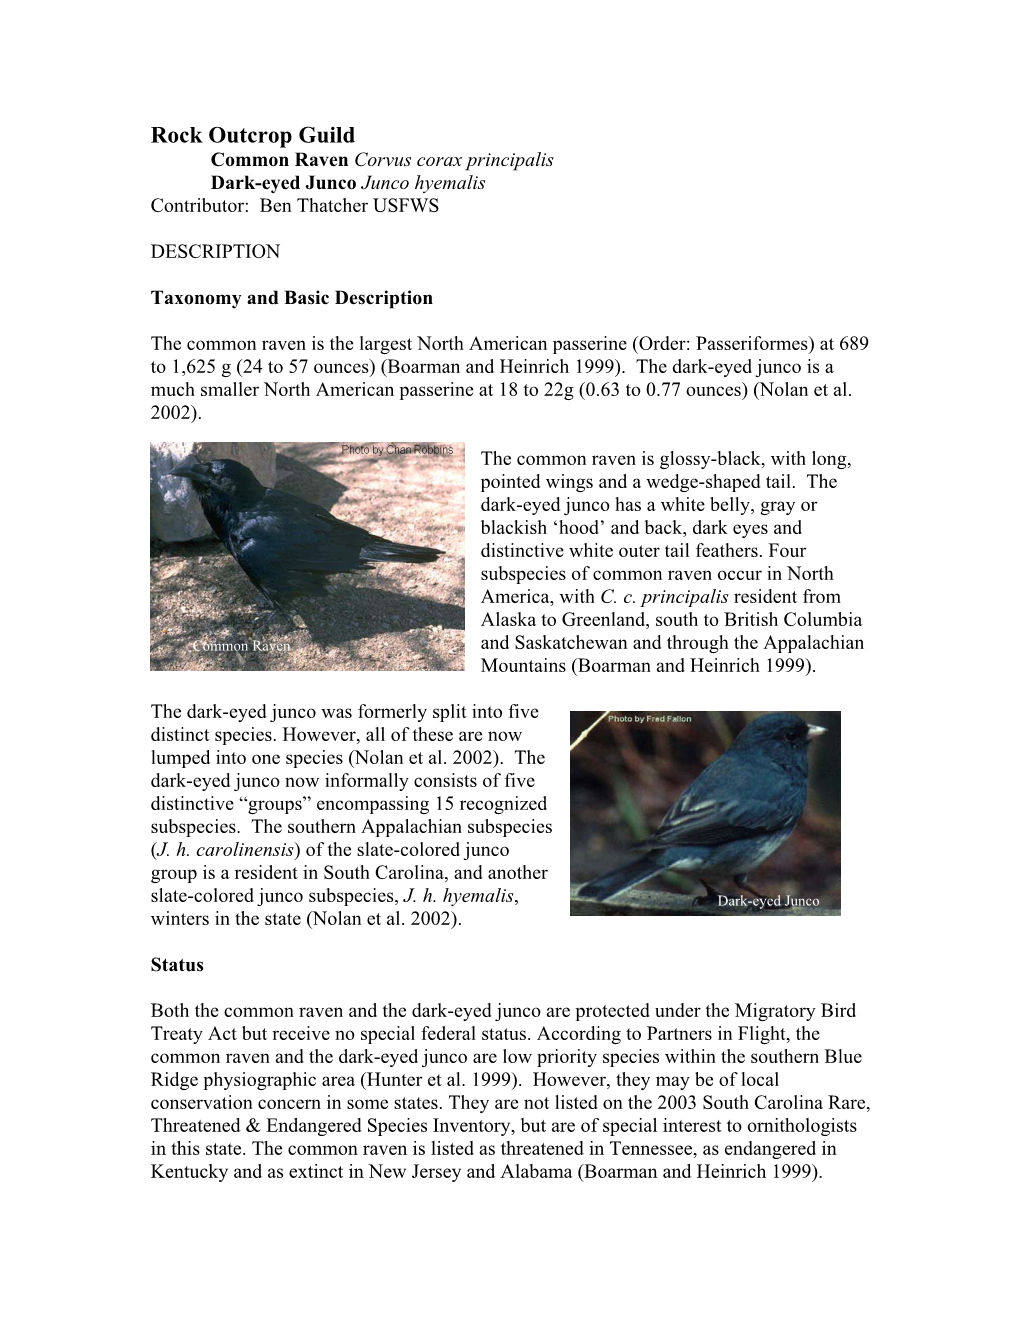 Rock Outcrop Guild Common Raven Corvus Corax Principalis Dark-Eyed Junco Junco Hyemalis Contributor: Ben Thatcher USFWS